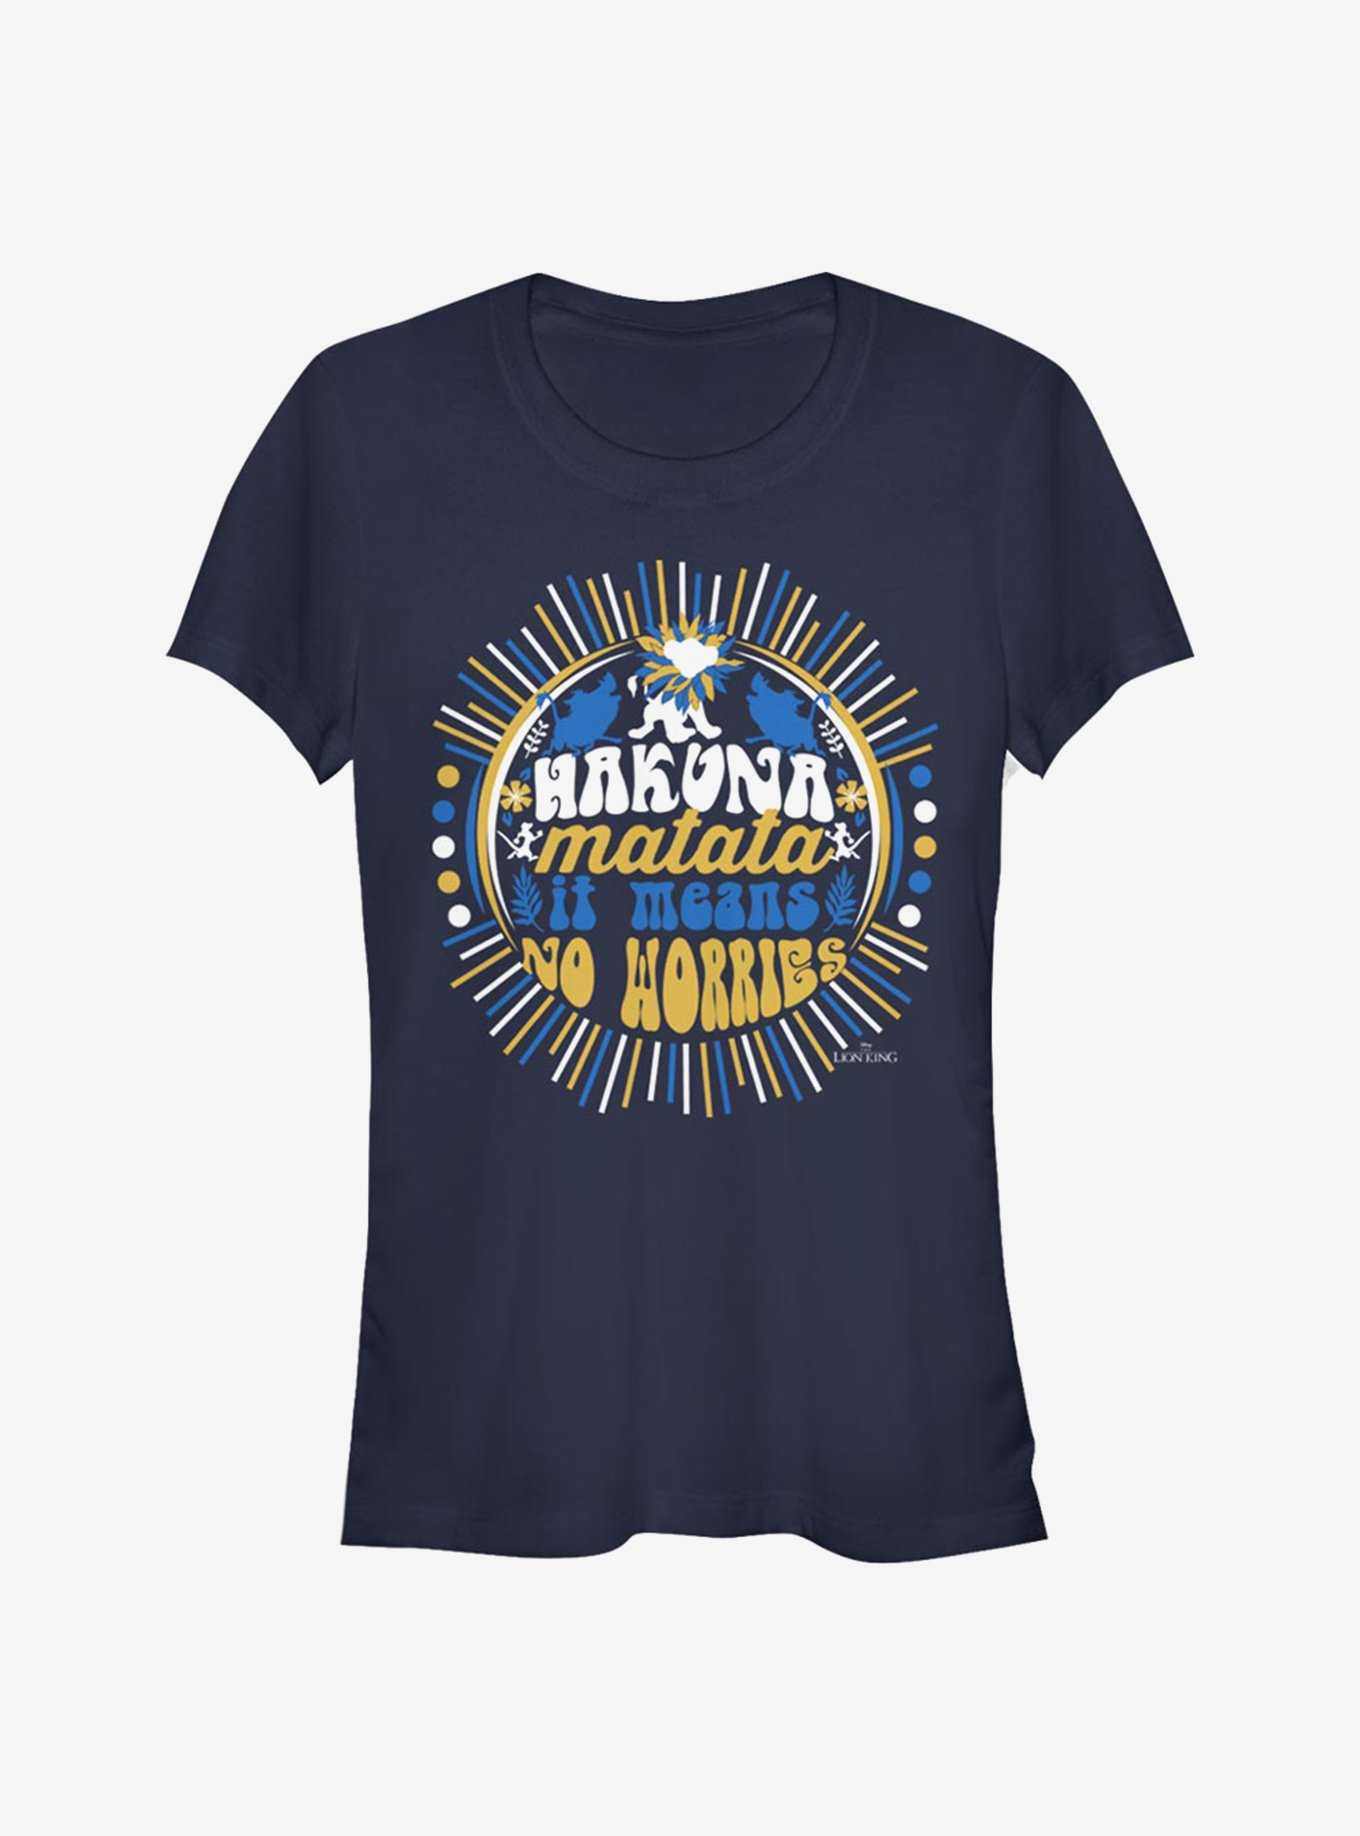 Disney The Lion King Hakuna Matata Girls T-Shirt, , hi-res